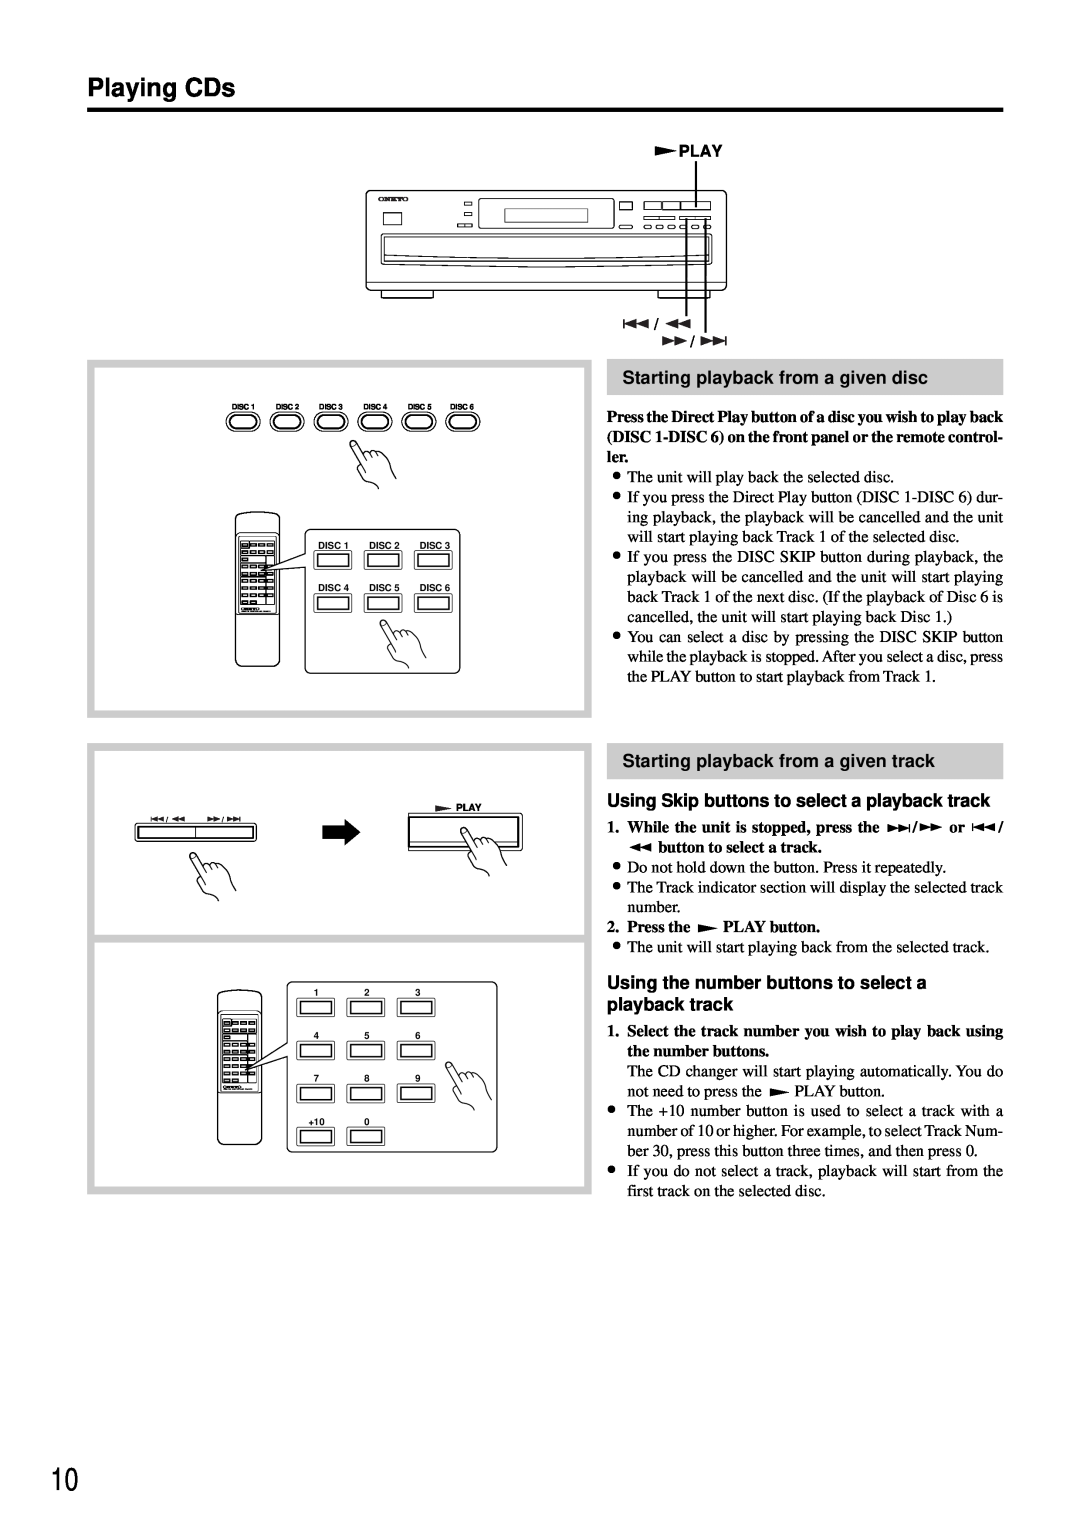 Onkyo DX-C370 instruction manual Starting playback from a given disc, Starting playback from a given track, Playing CDs 